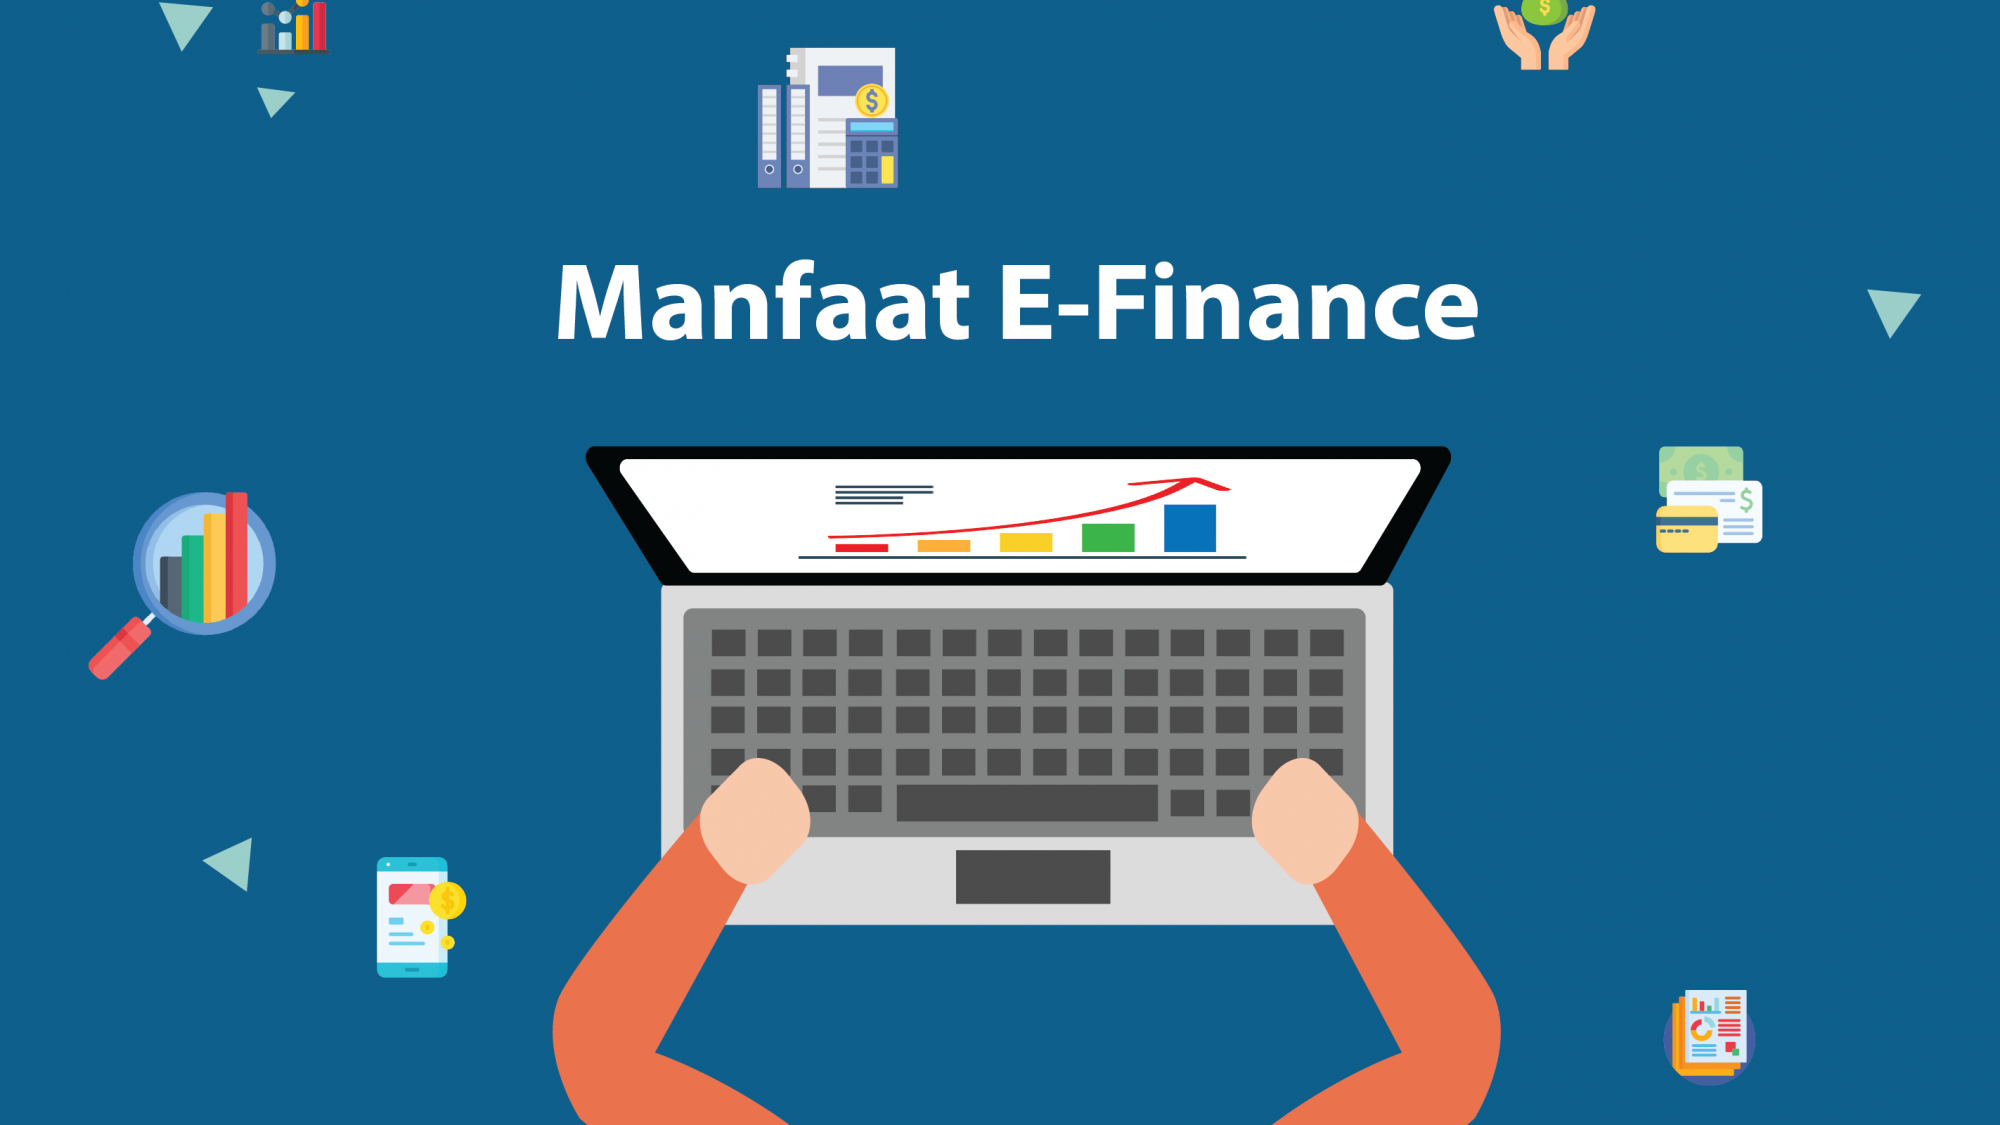 Manfaat E-Finance